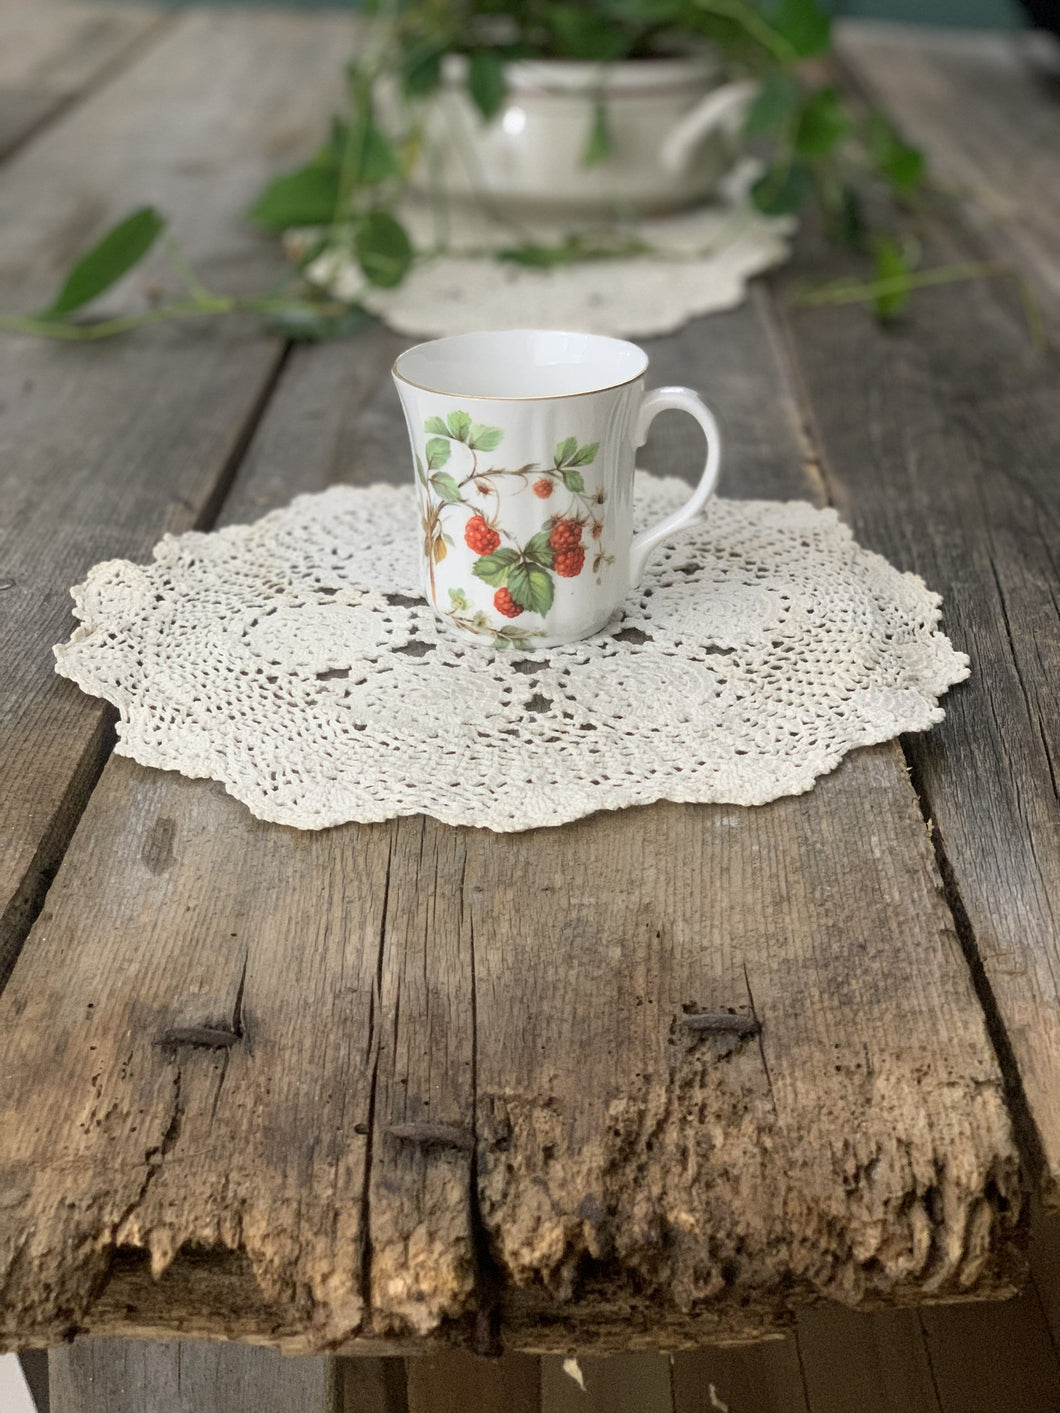 Native apothicaire accessoire Tasse Framboise - Petits fruits Duchess England Collection des mugs individuels